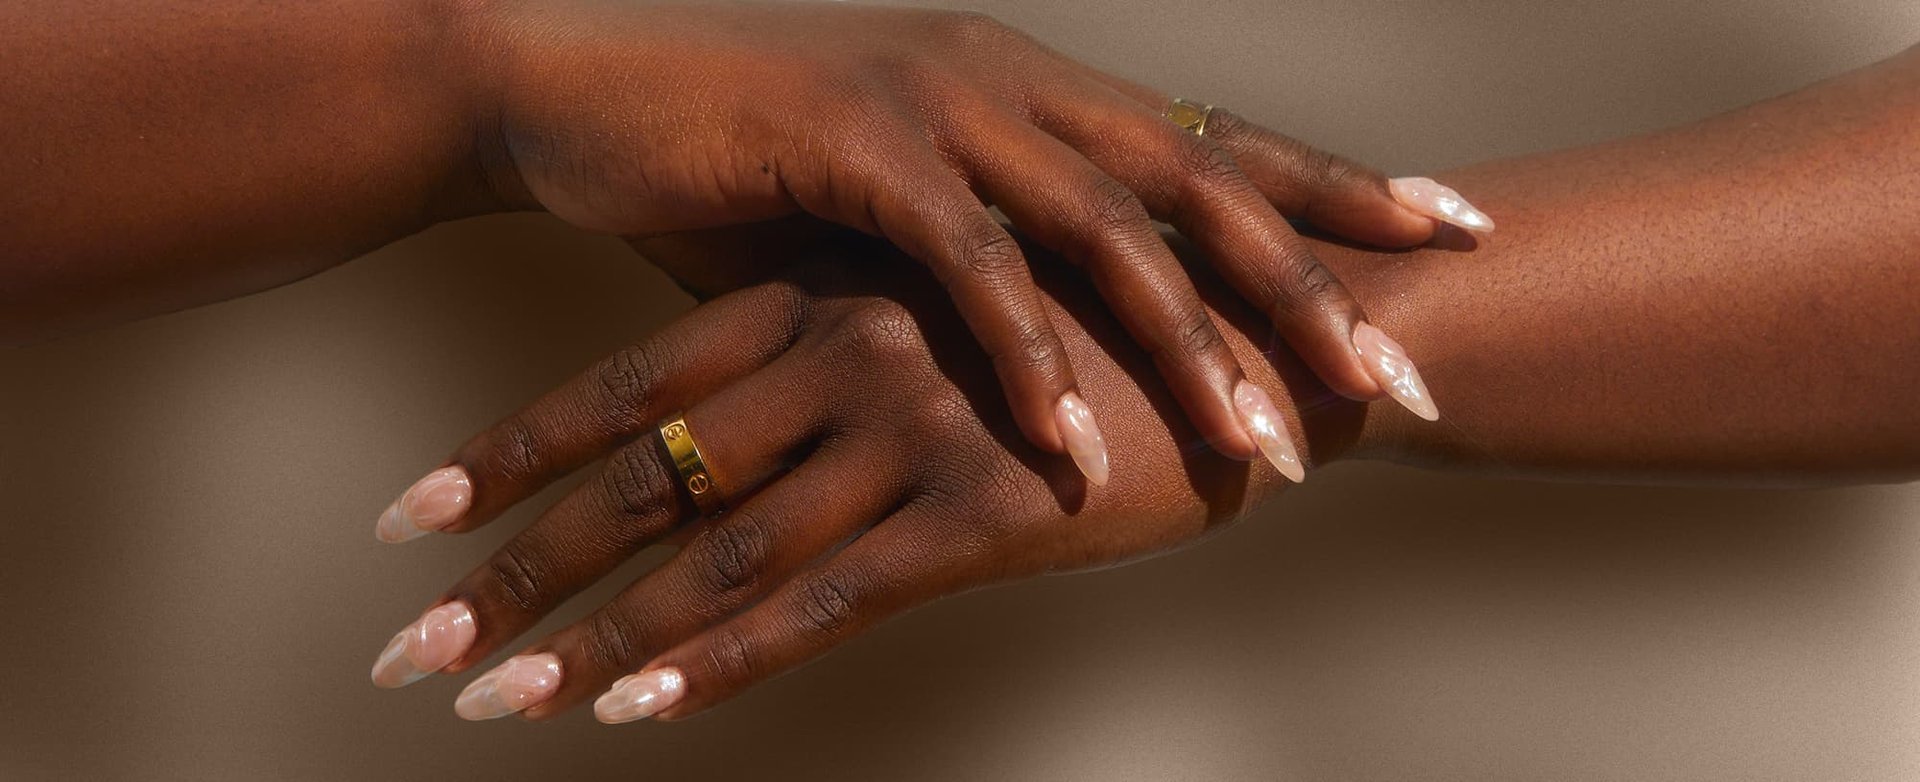 How to Remove Acrylic Nails Without Damaging Your Nails - L'Oréal Paris